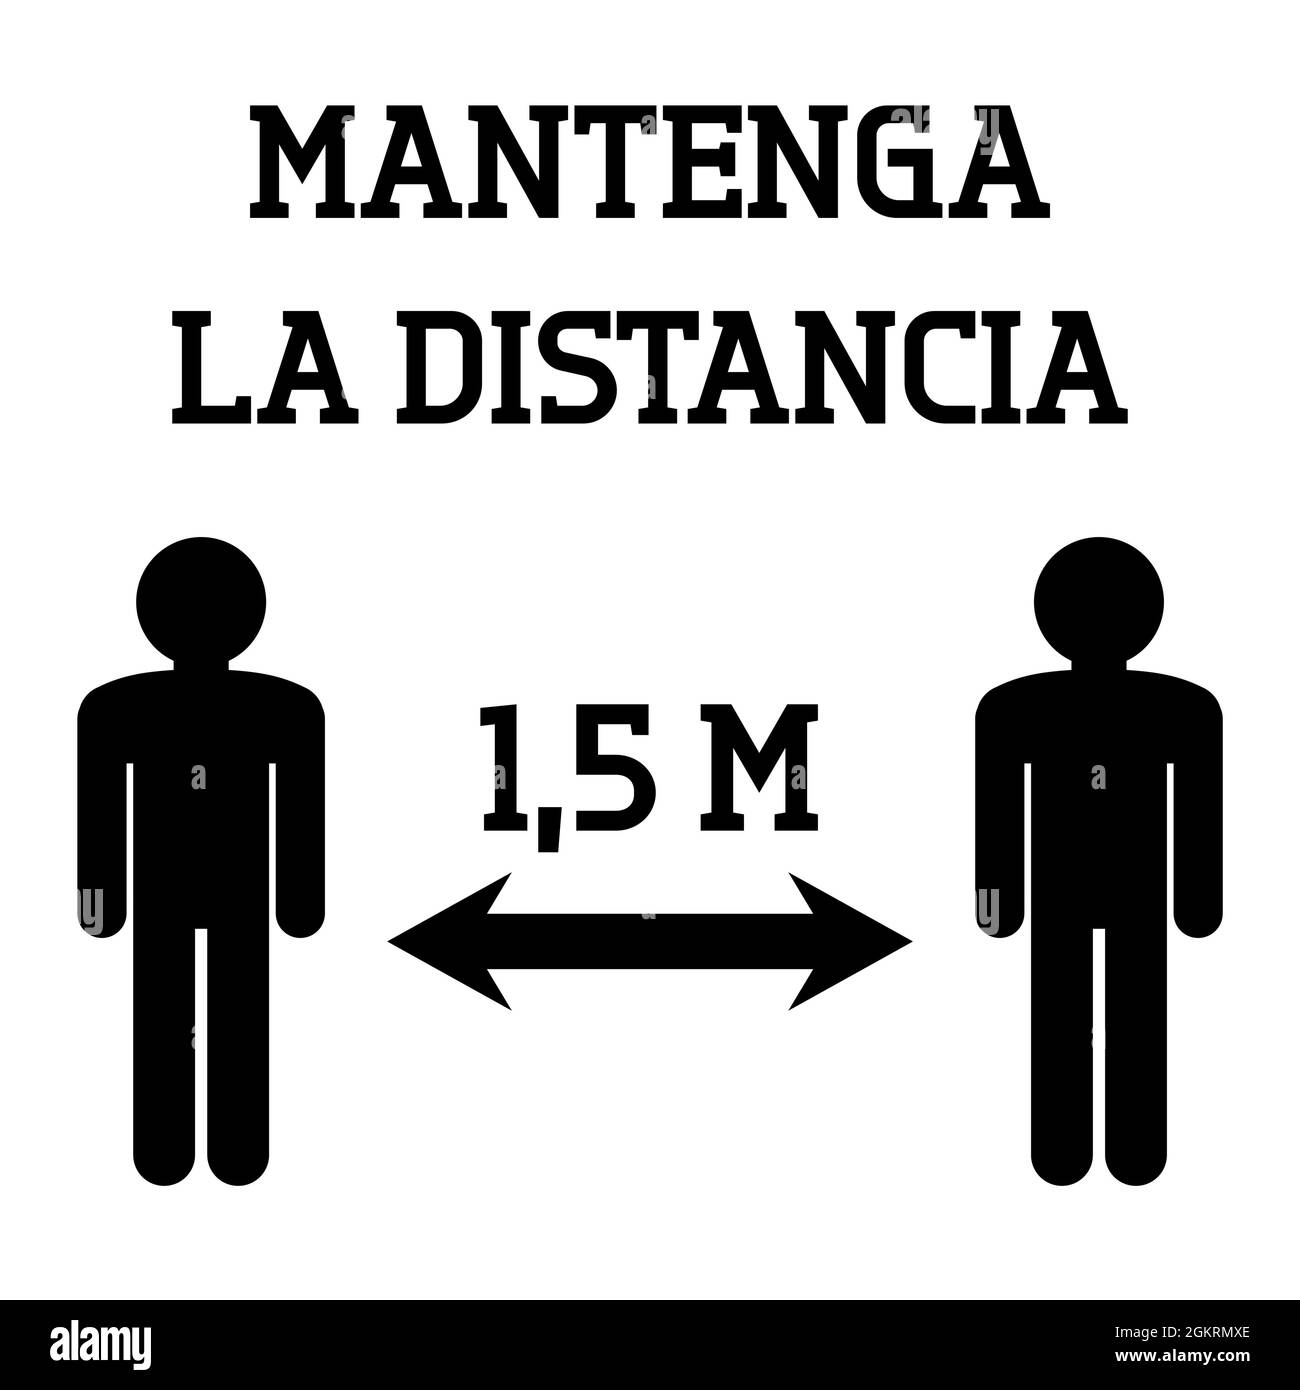 Social distancing sign in Spanish language. Mantenga la distancia (English: Keep distance). Coronavirus pandemic safety. Vector illustration. Stock Vector